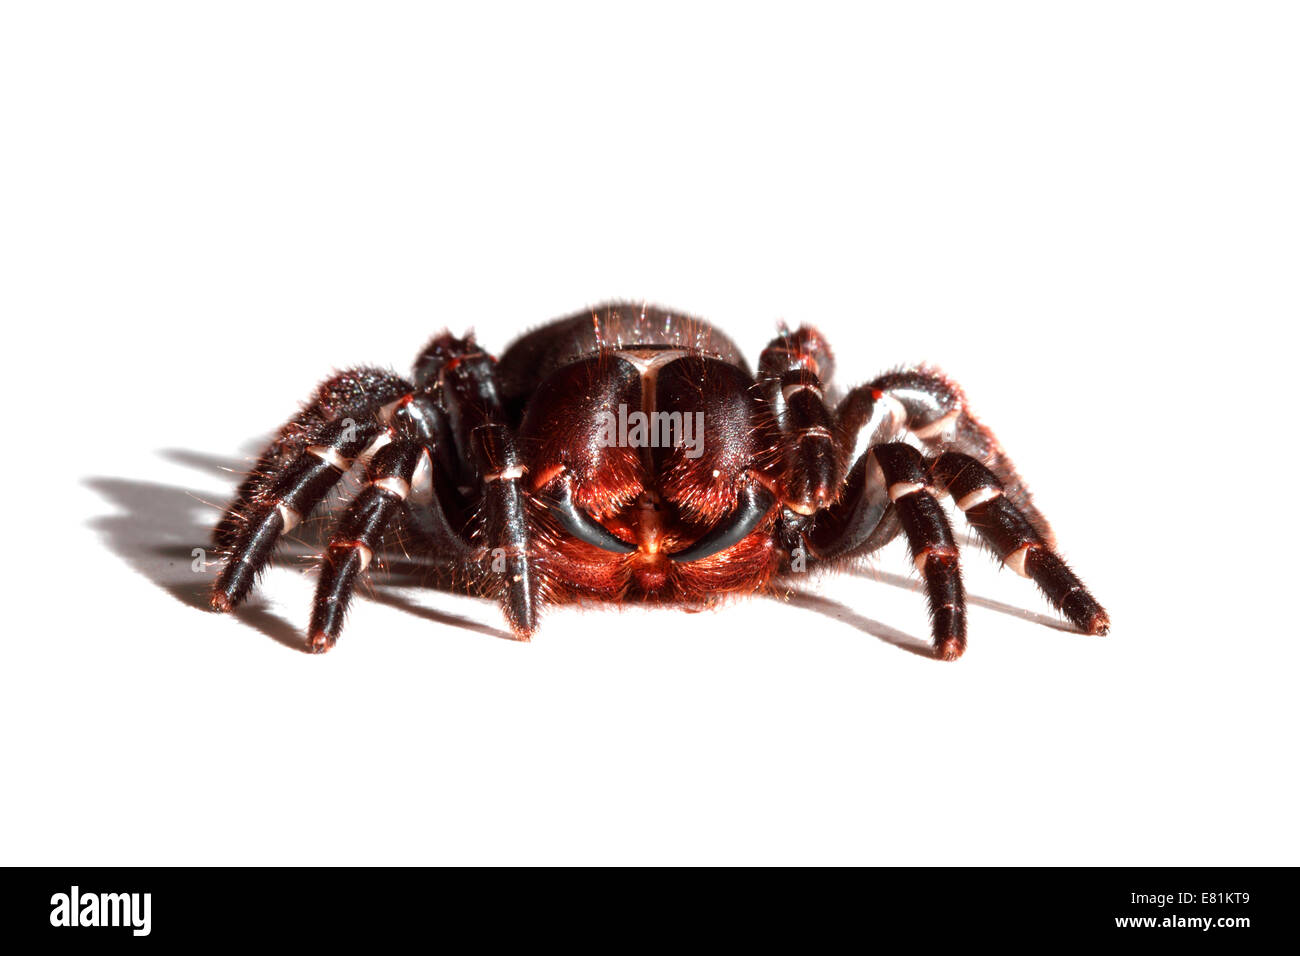 Sydney Funnel-web Spider (Atrax robustus) Stock Photo